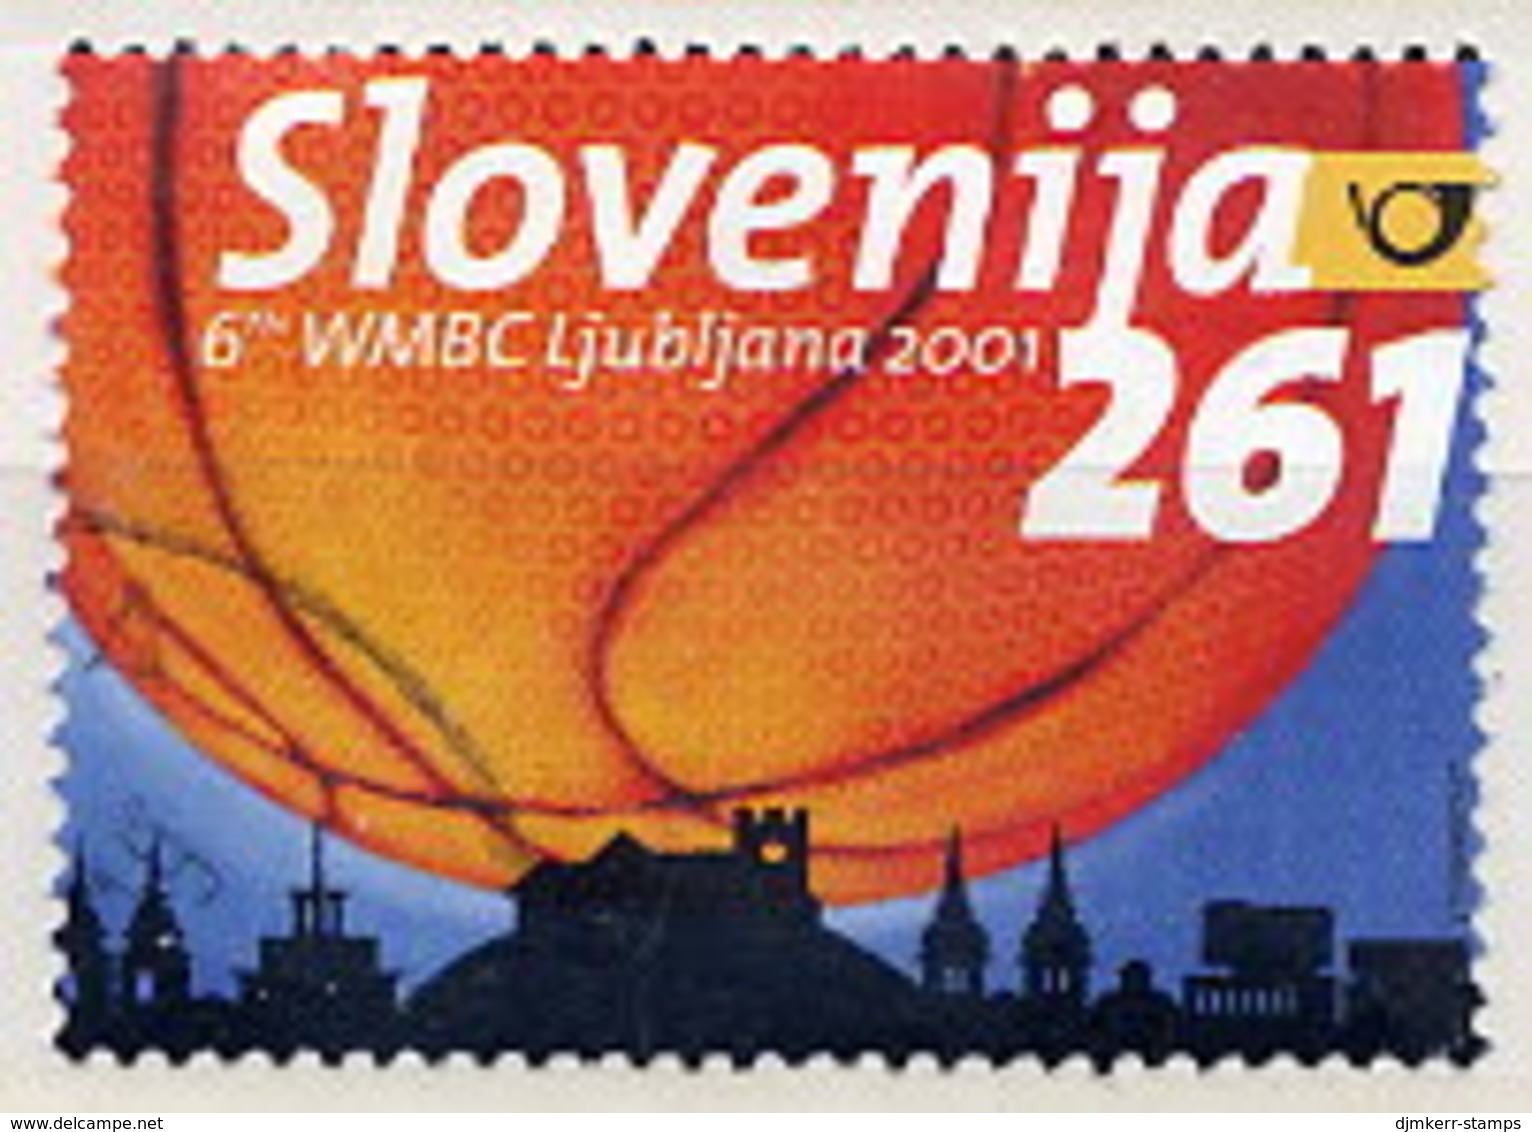 SLOVENIA 2001 Basketball World Championship  Used  Michel 358 - Eslovenia